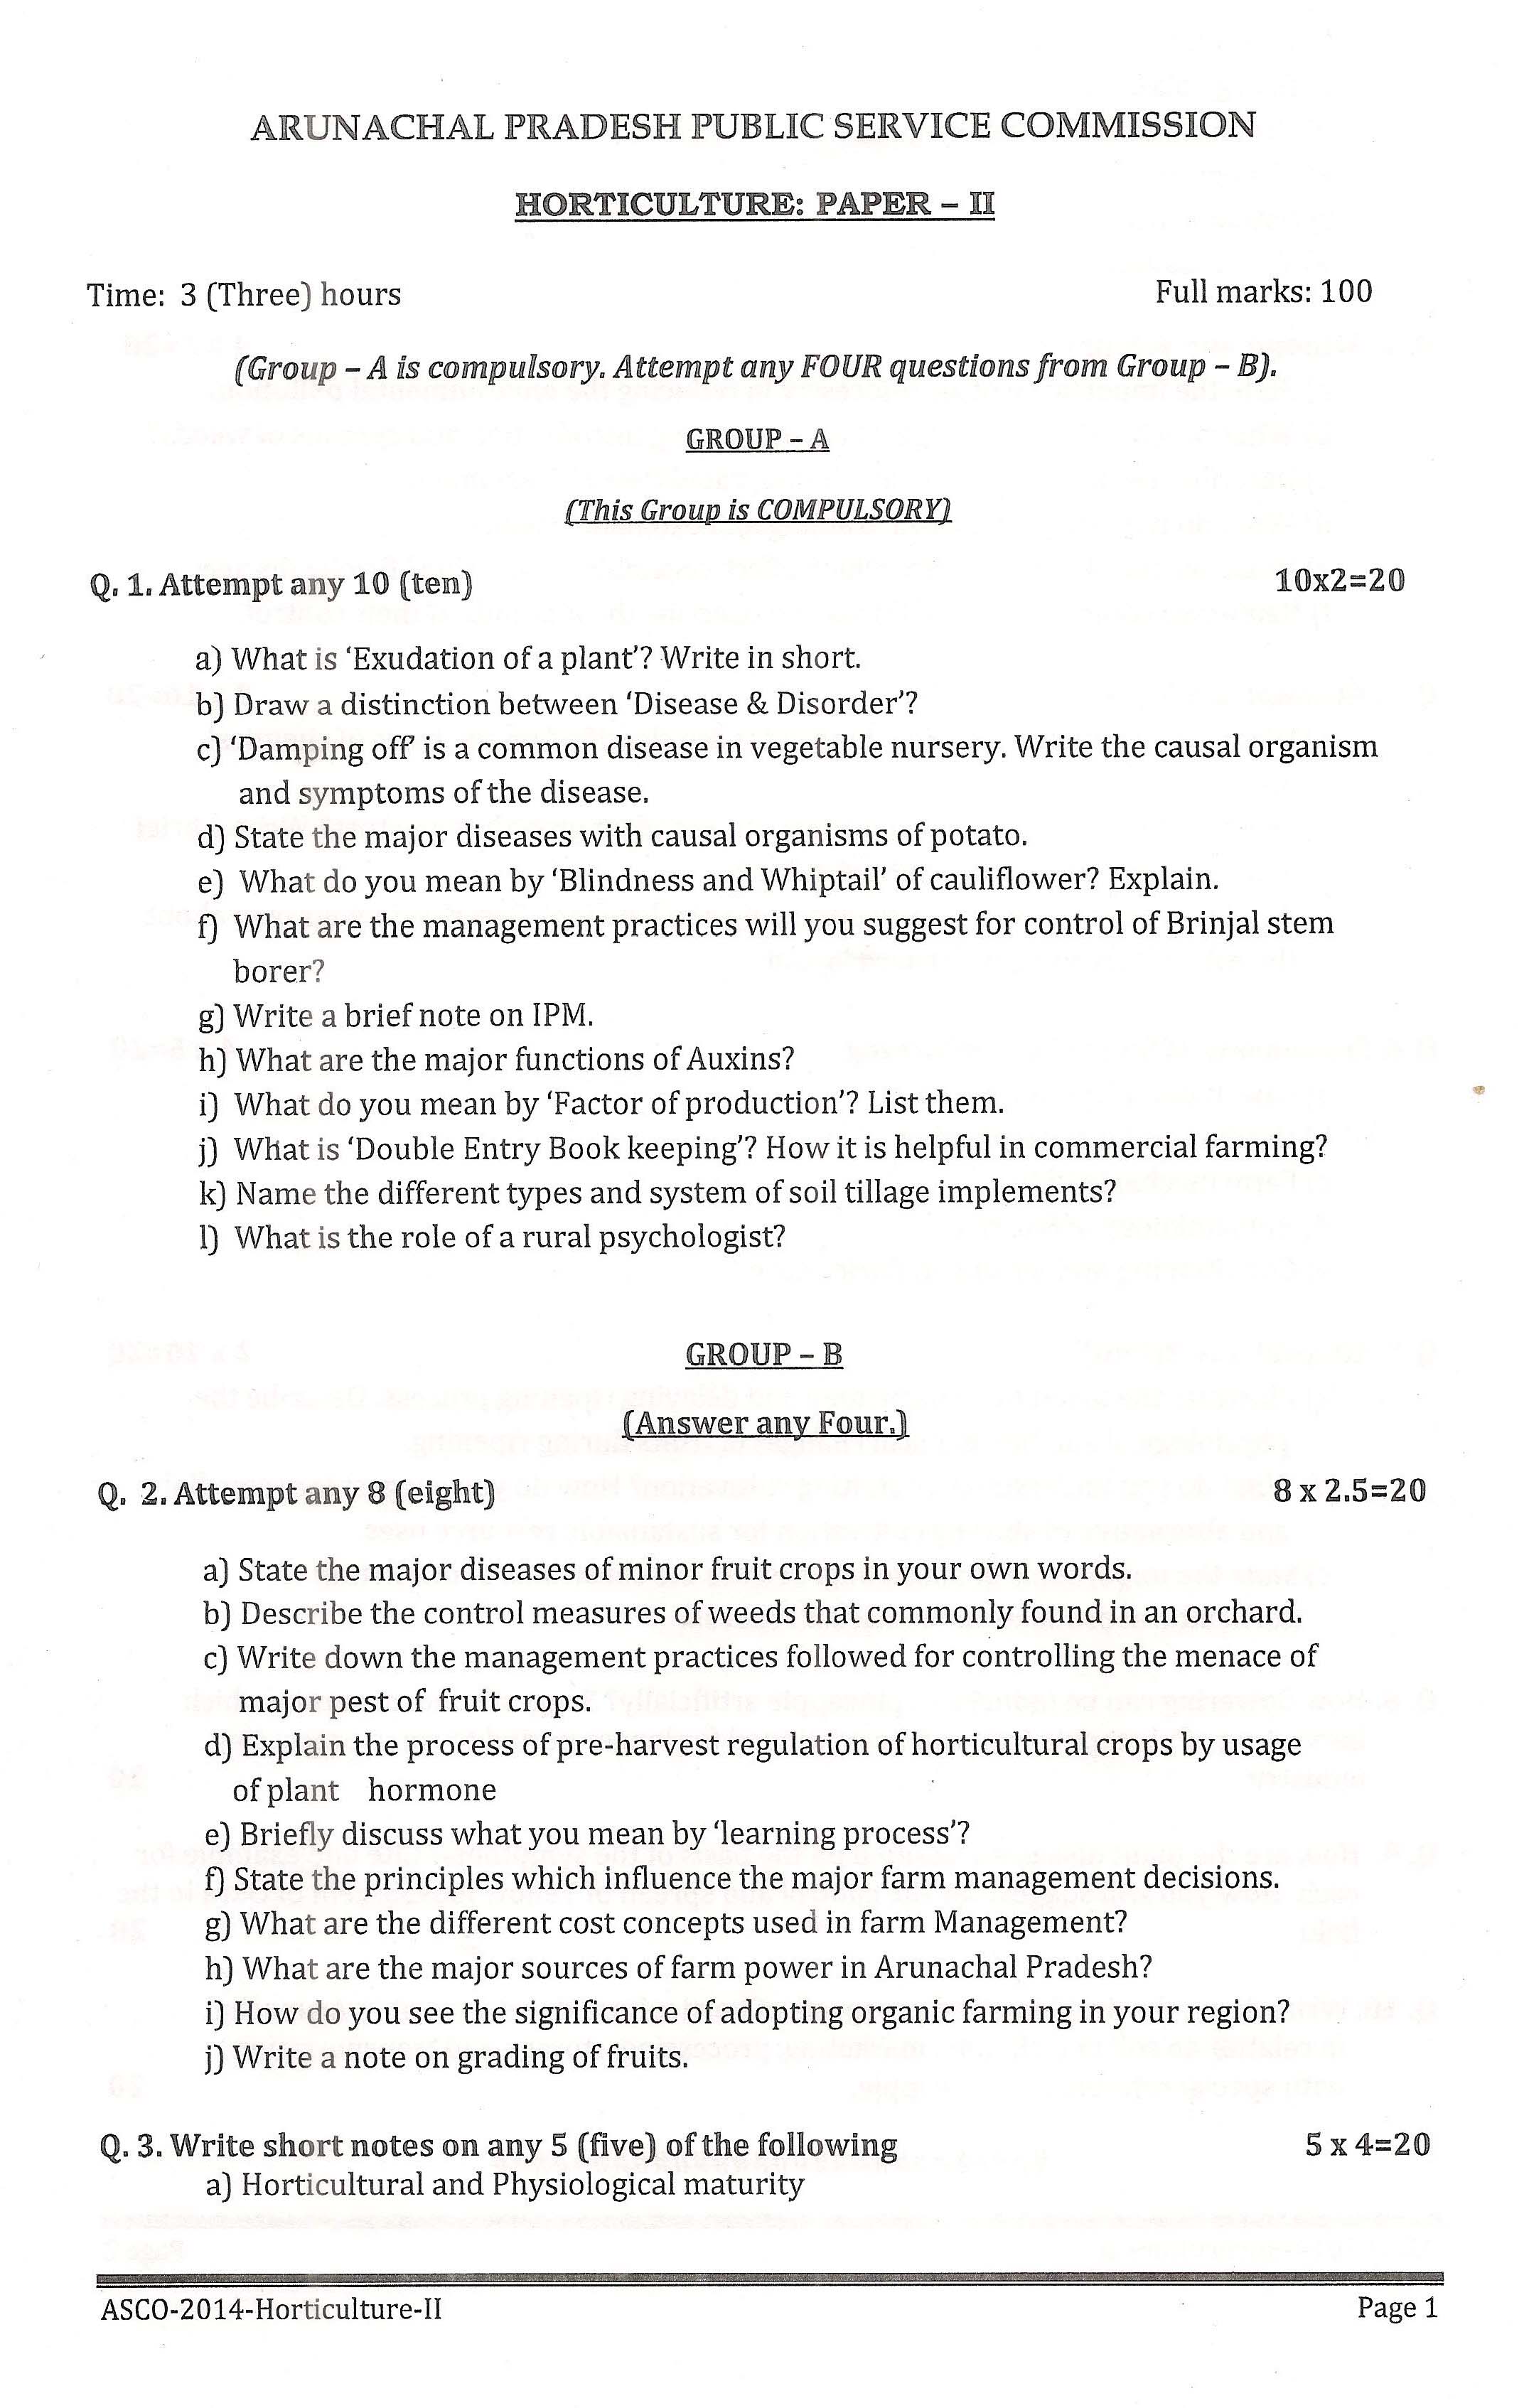 APPSC ASCO Horticulture Paper II Exam Question Paper 2014 1